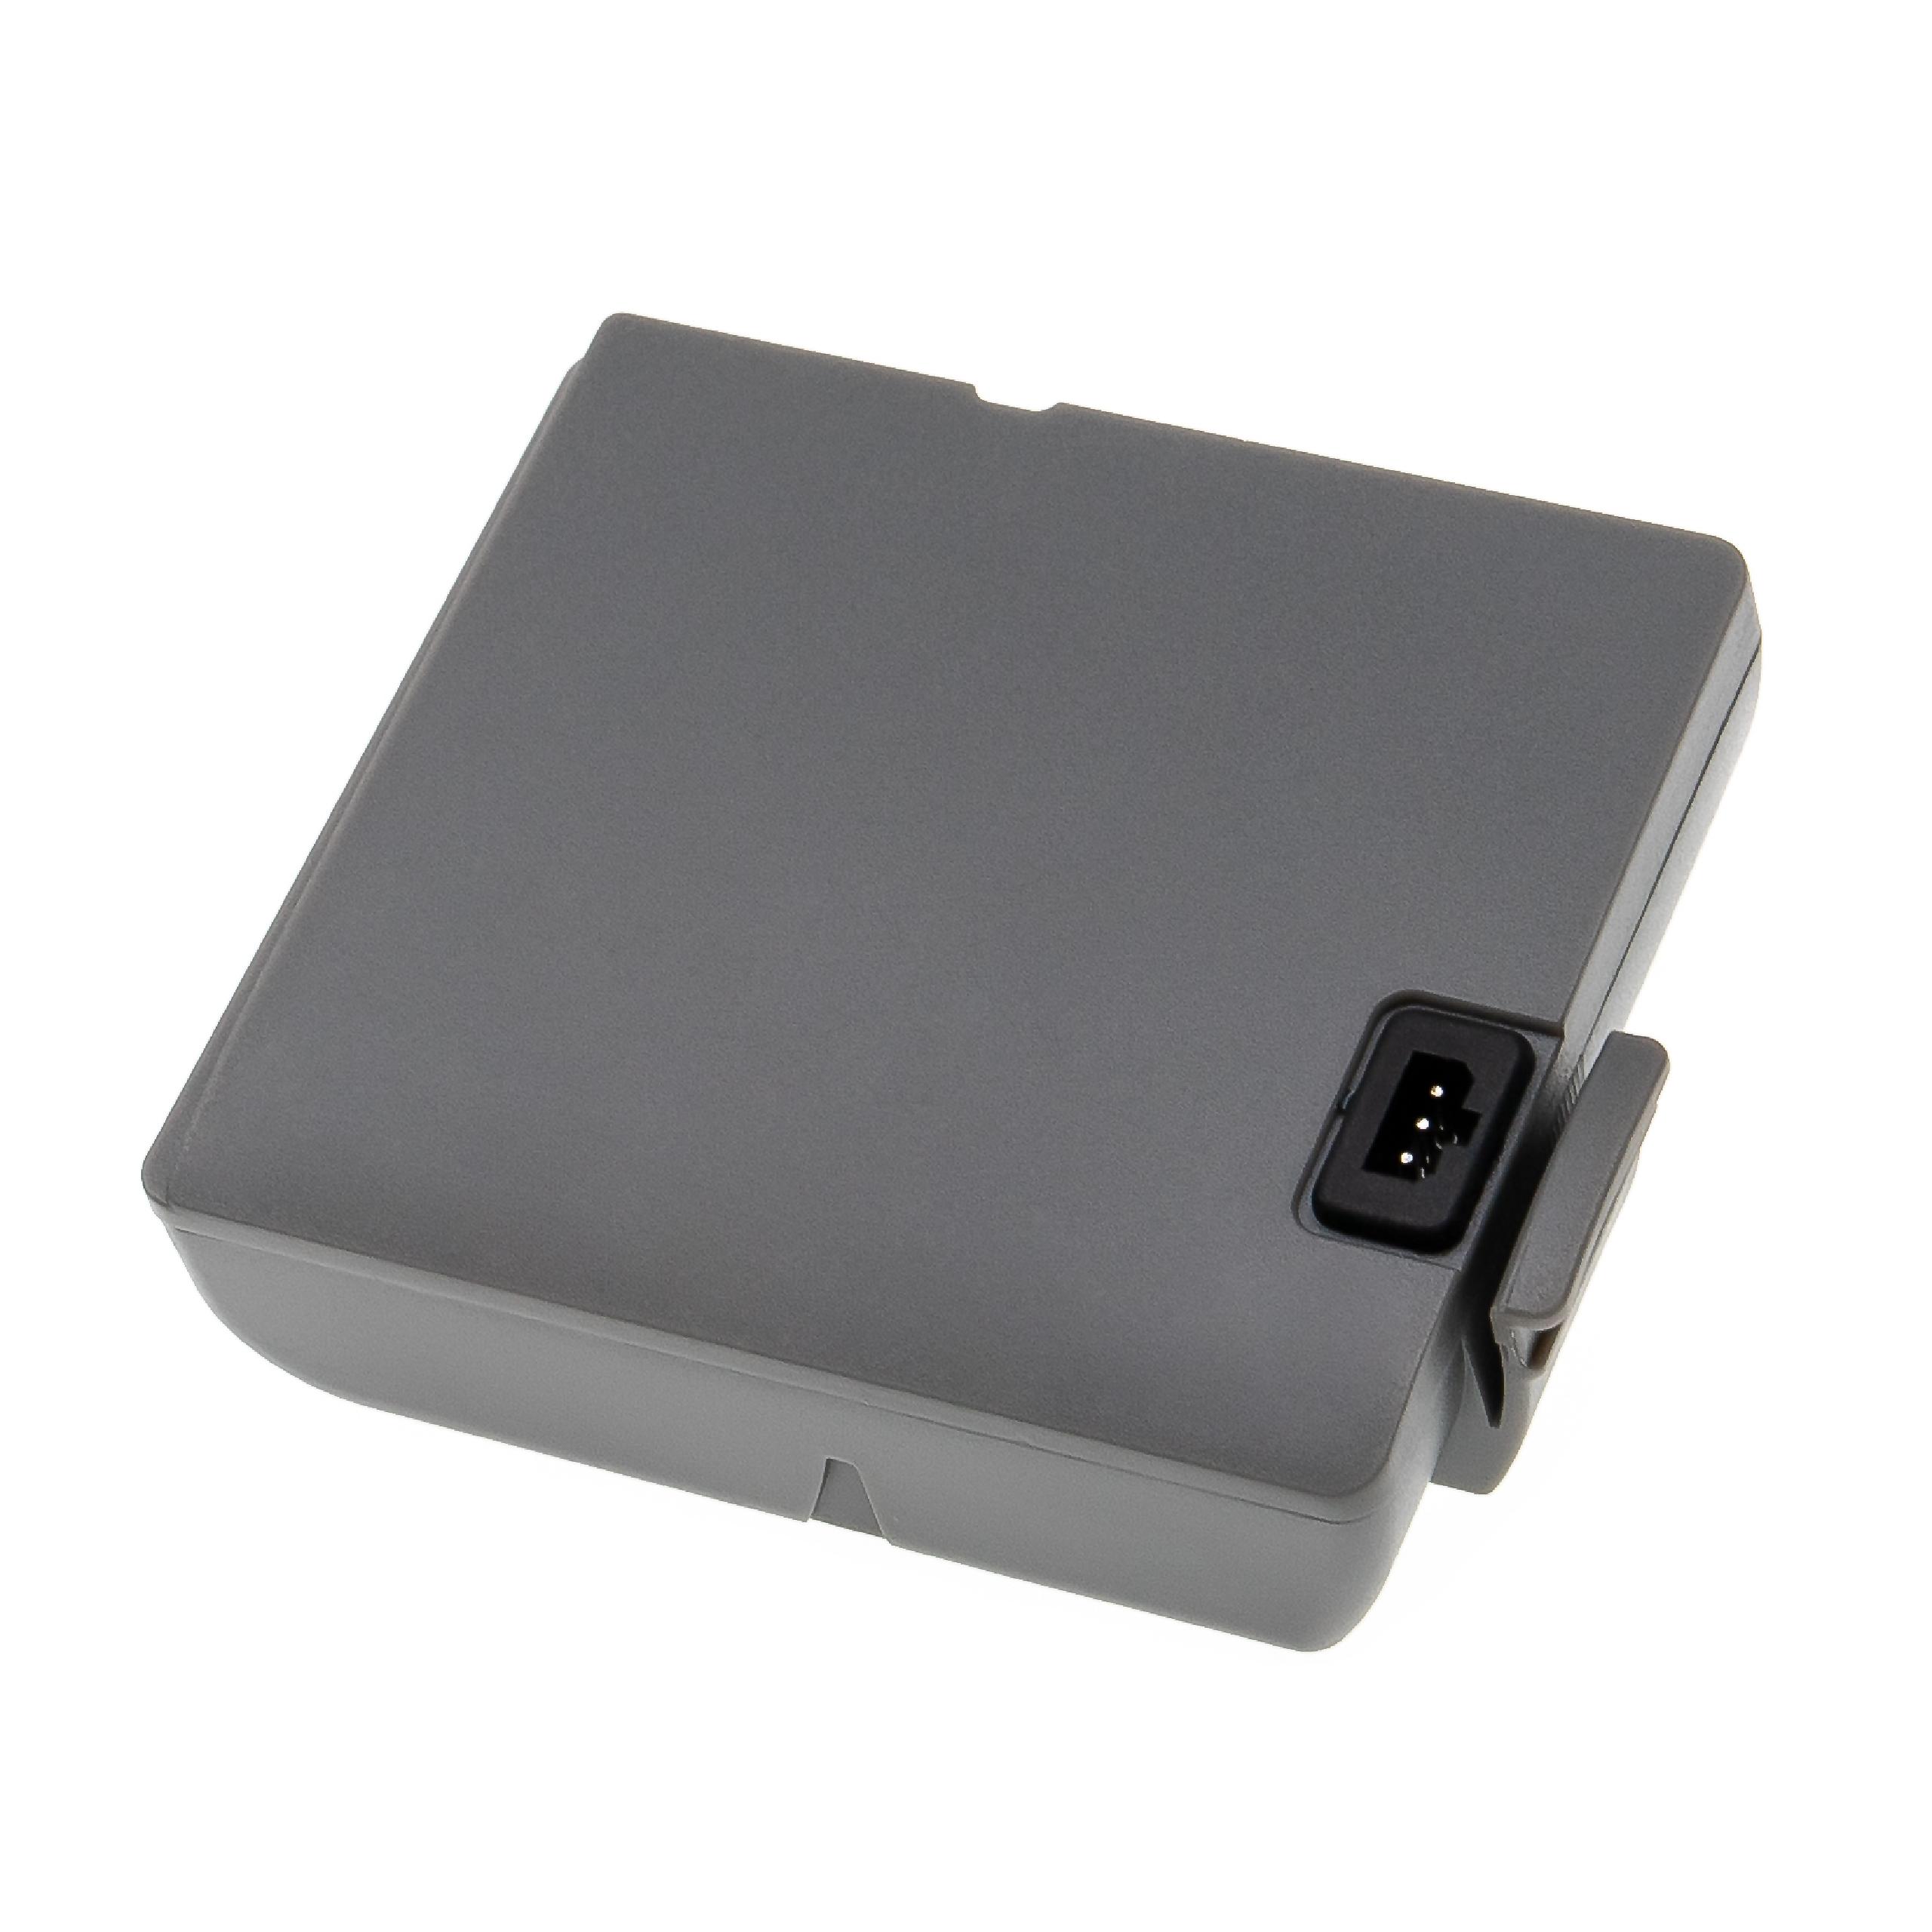 Printer Battery Replacement for Zebra CT17102-2, AK17463-005 - 6800mAh 7.4V Li-Ion